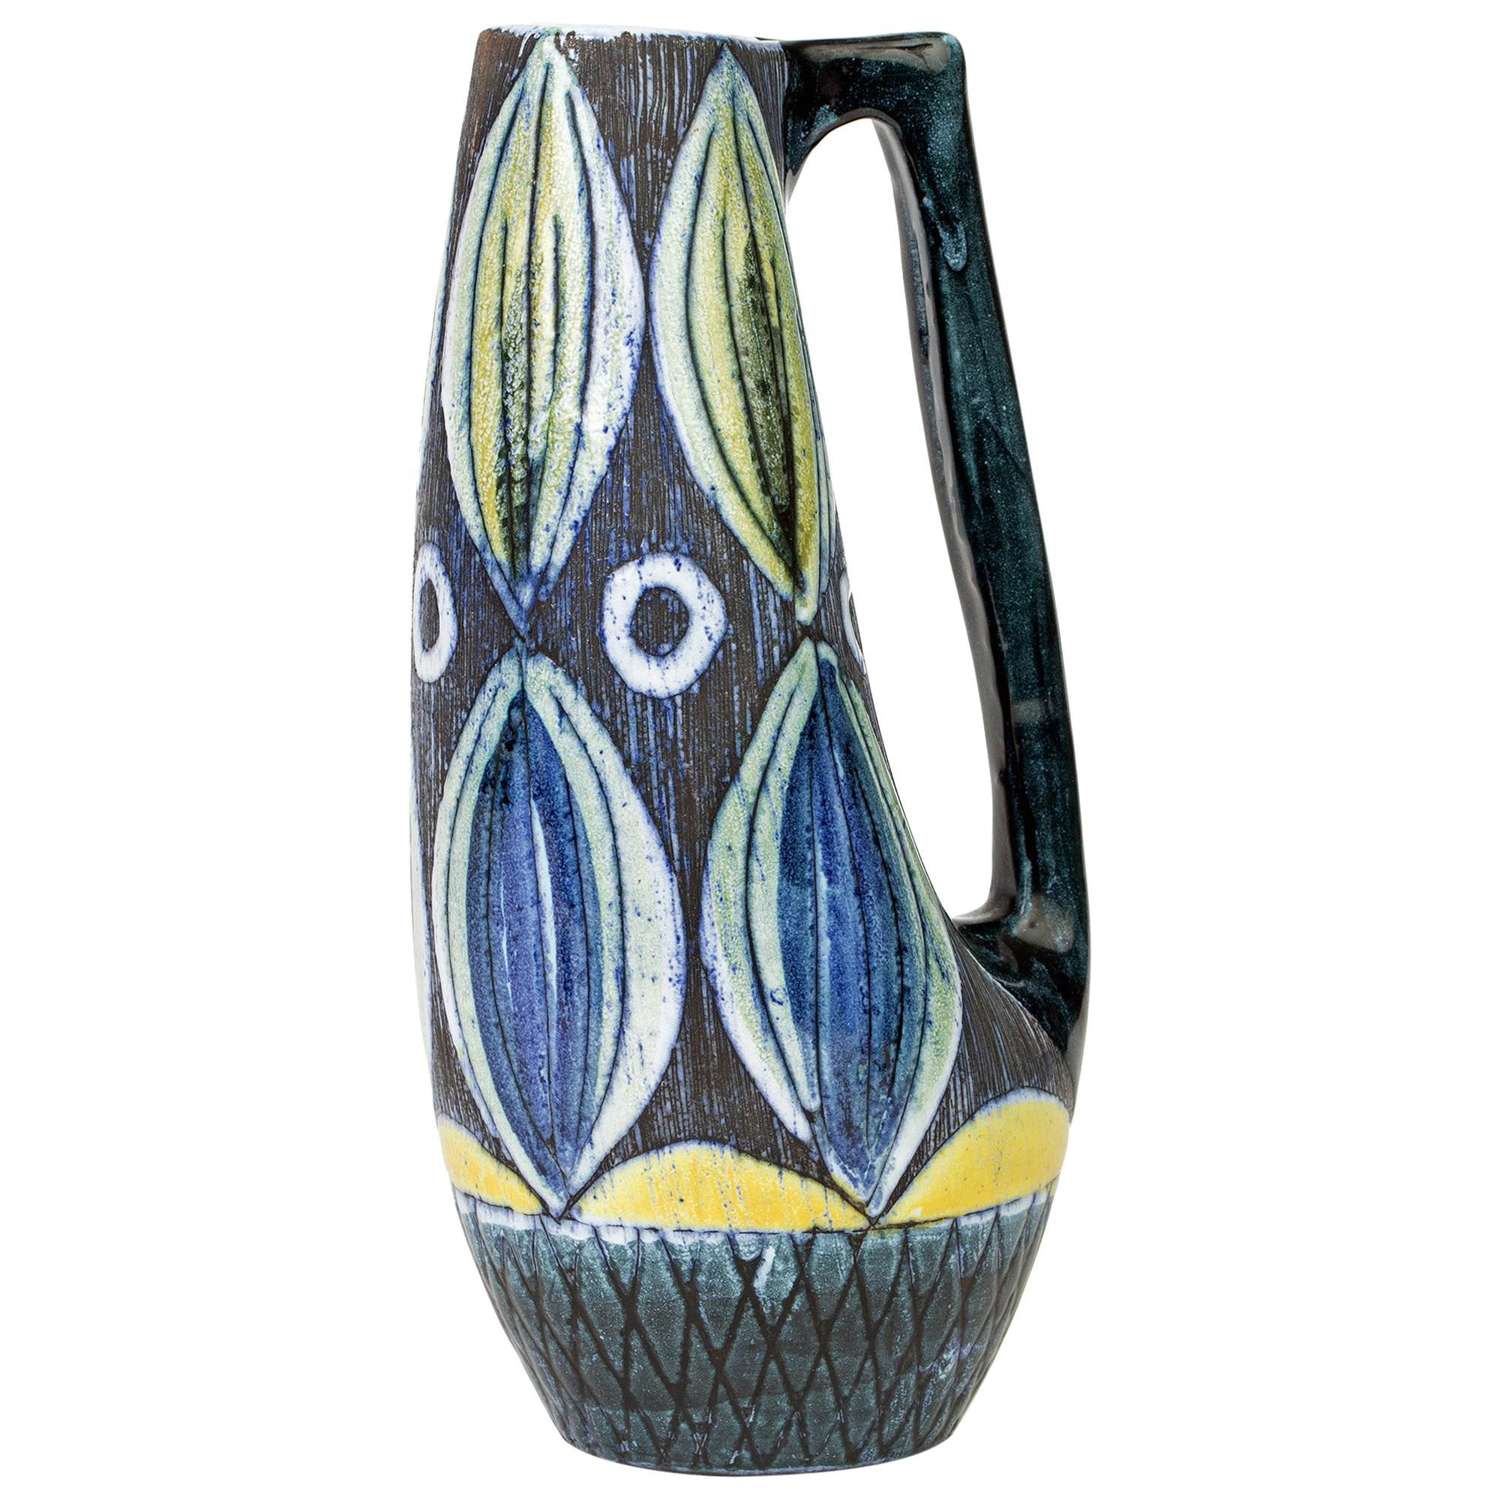 Tilgmans Keramik Swedish Painted Art Pottery Handled Vessel